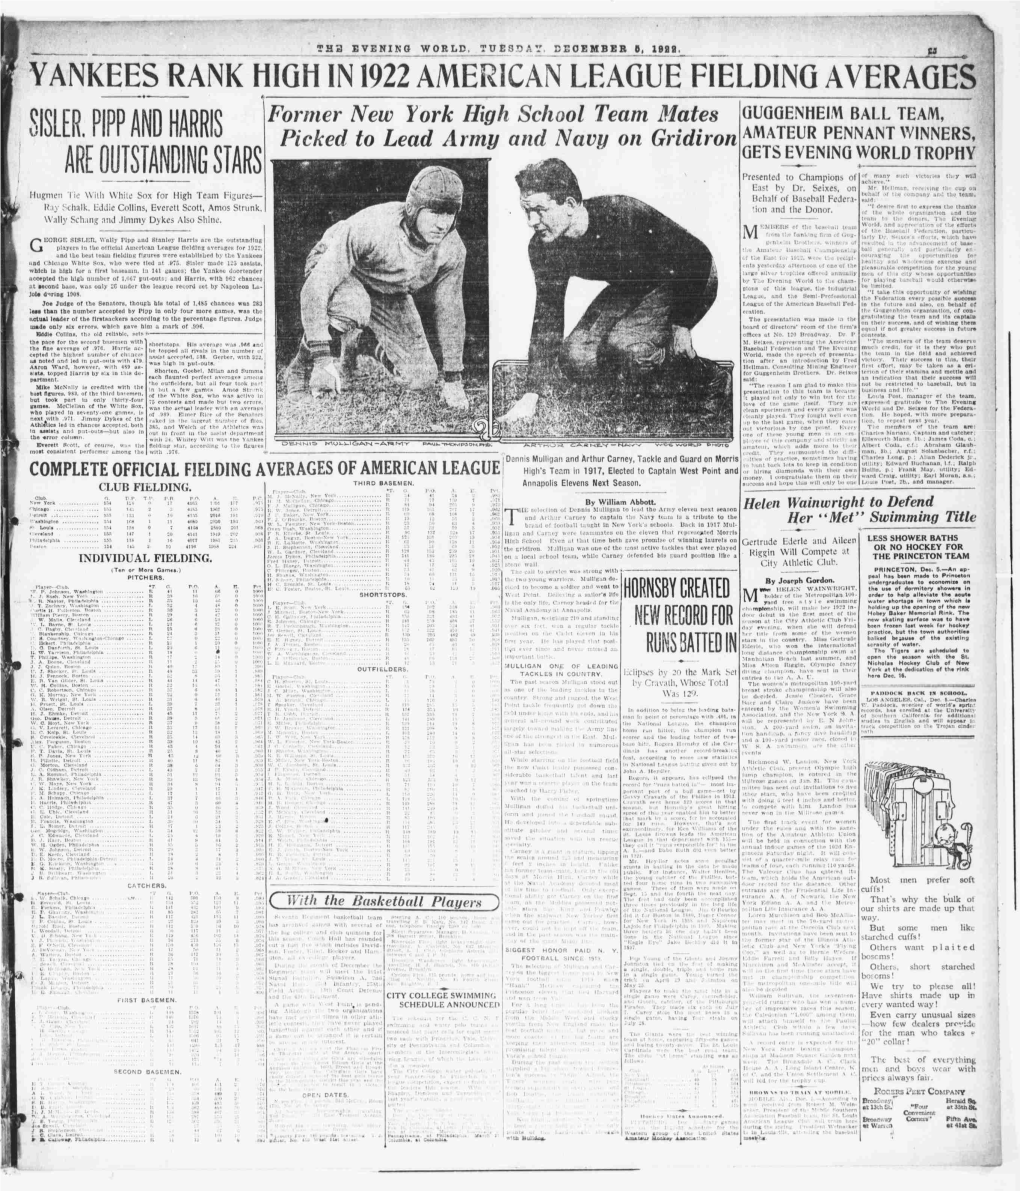 Yankees Rank High in 1922 American League Fielding